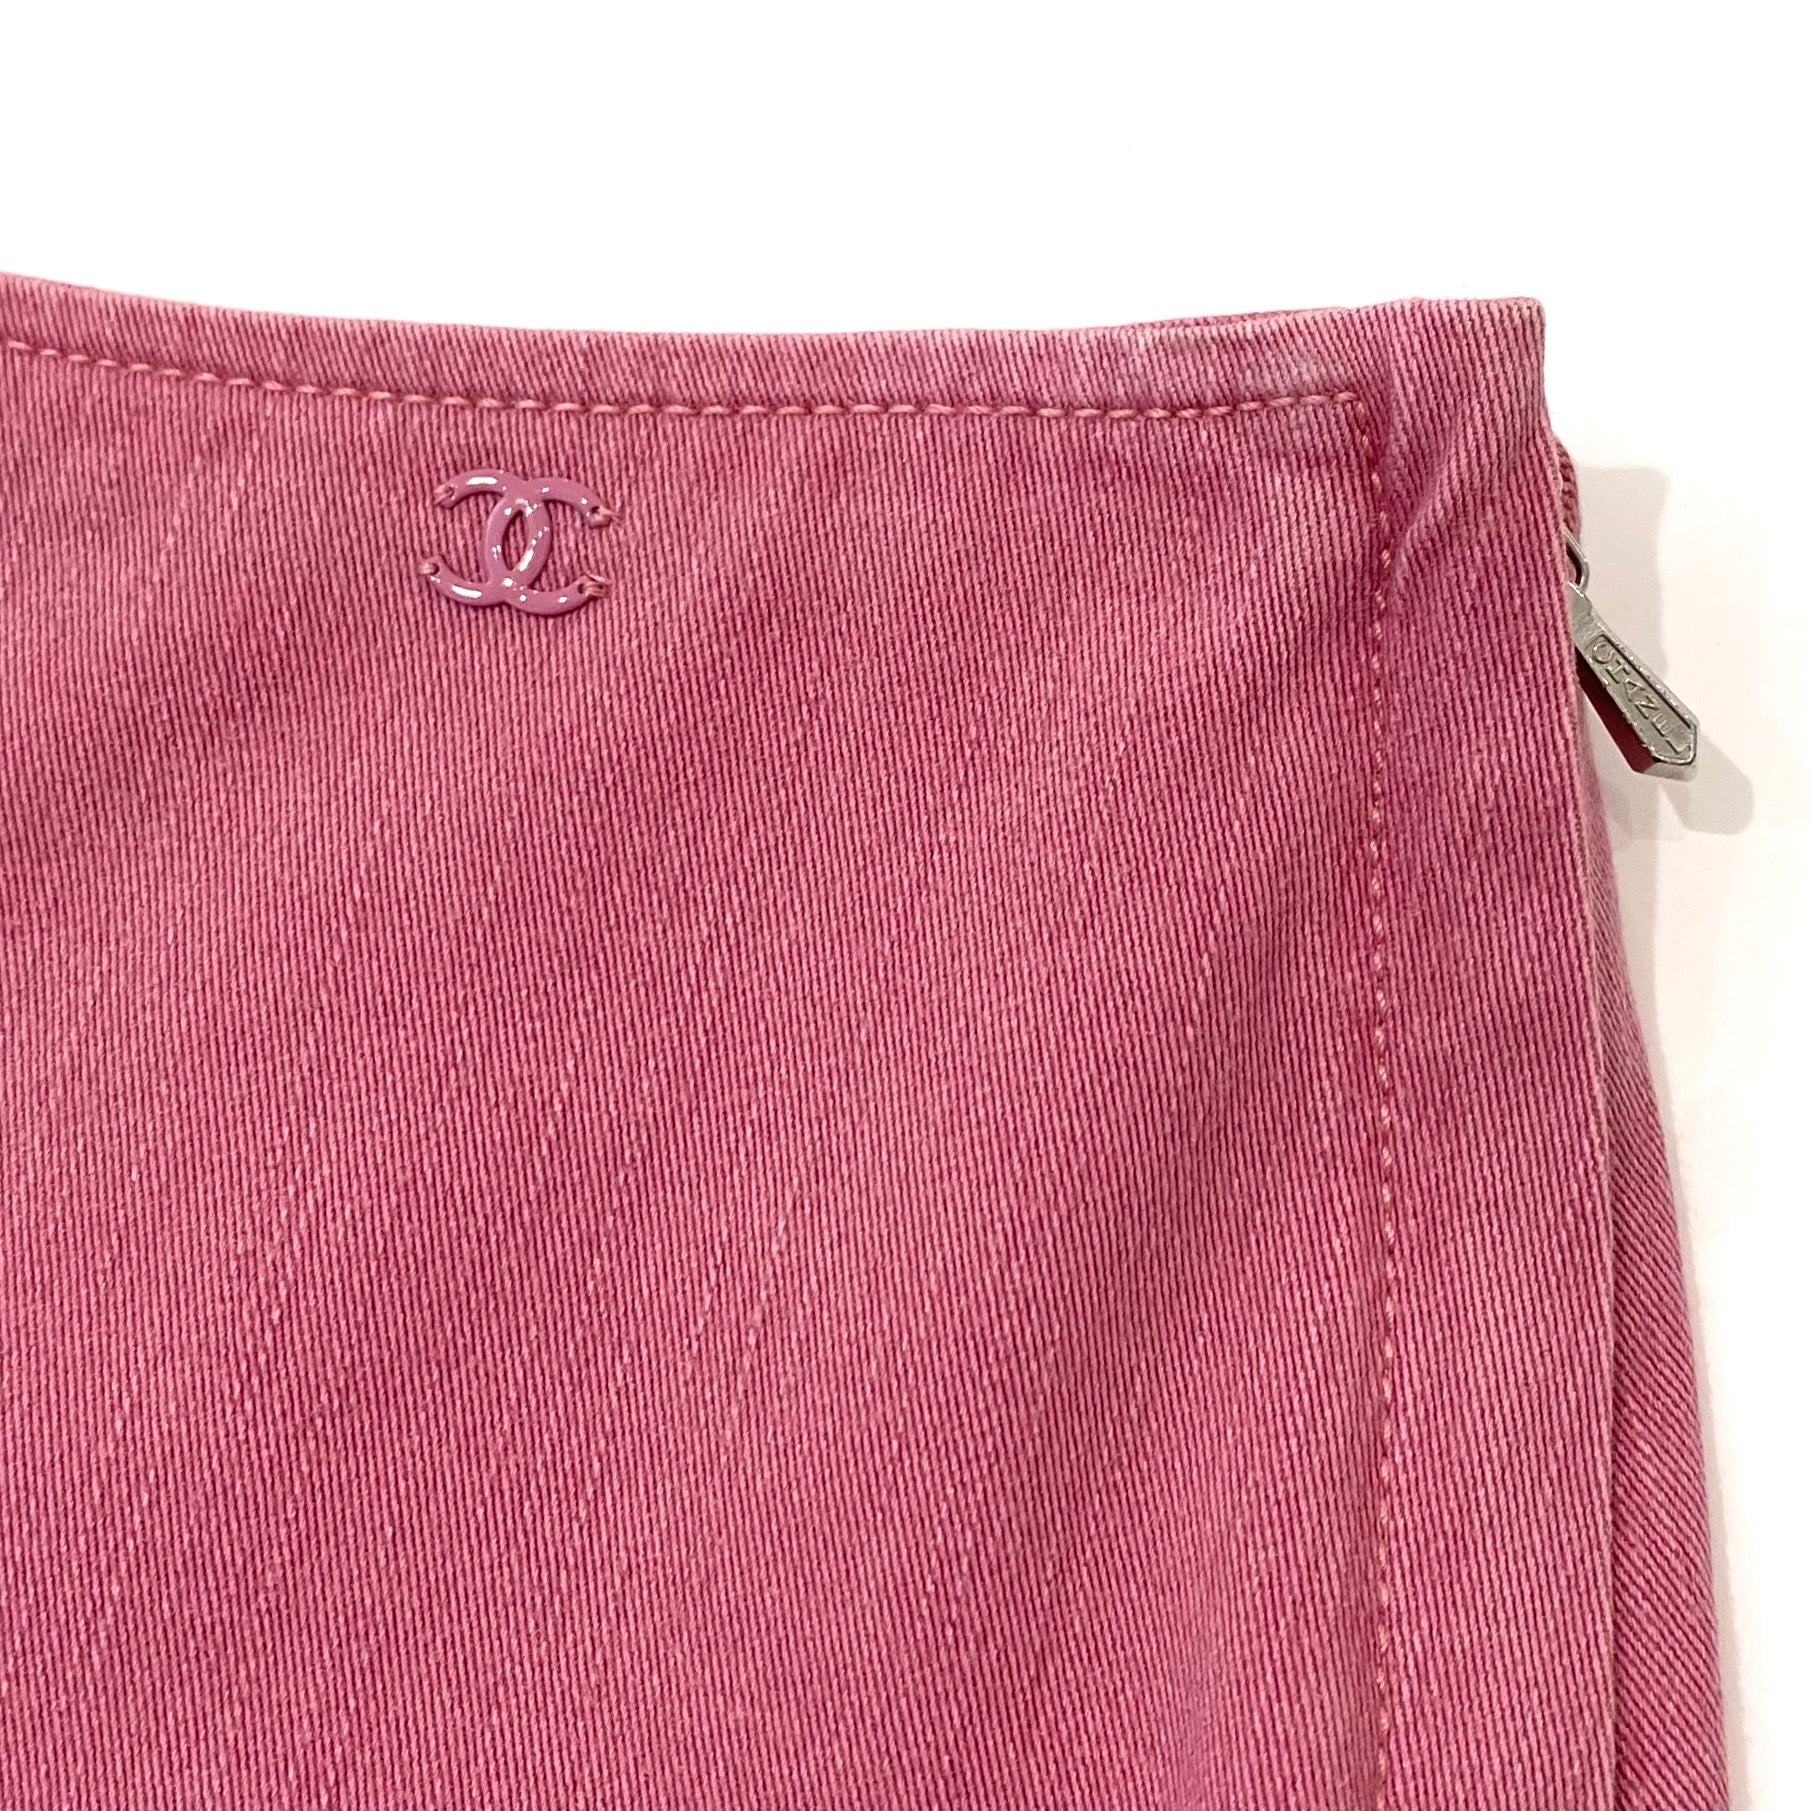 Chanel Pink Denim Skirt